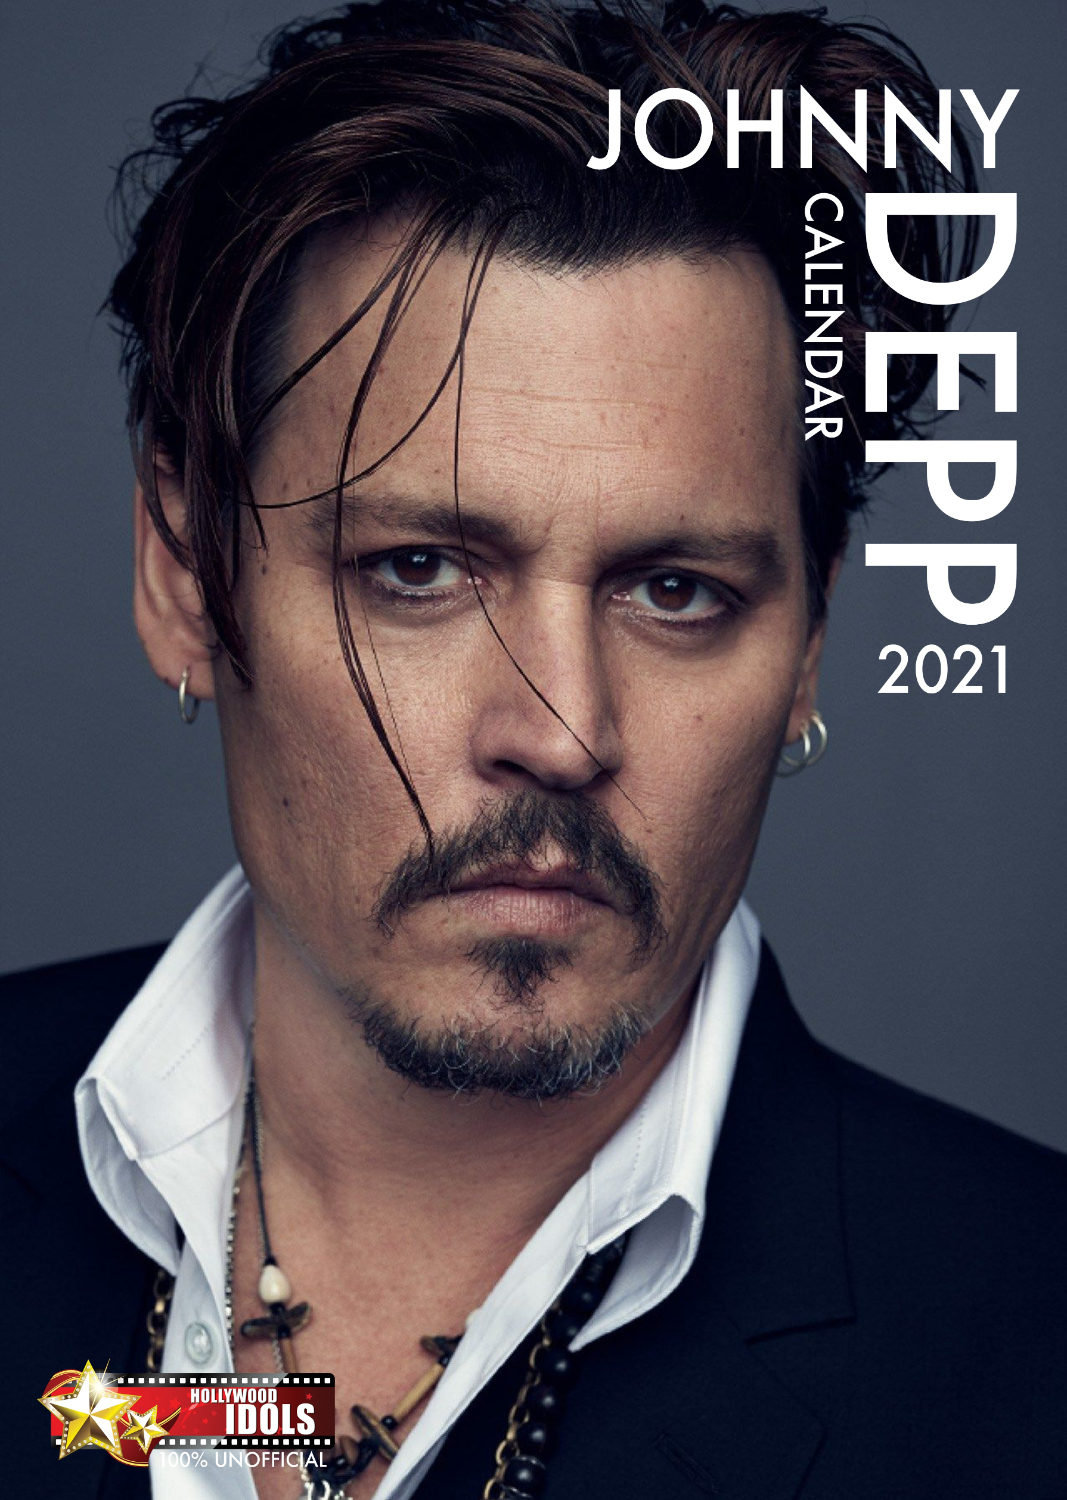 2021 Johnny Depp Is Ex Wife Amber Heard Still Sitting On The Divorce